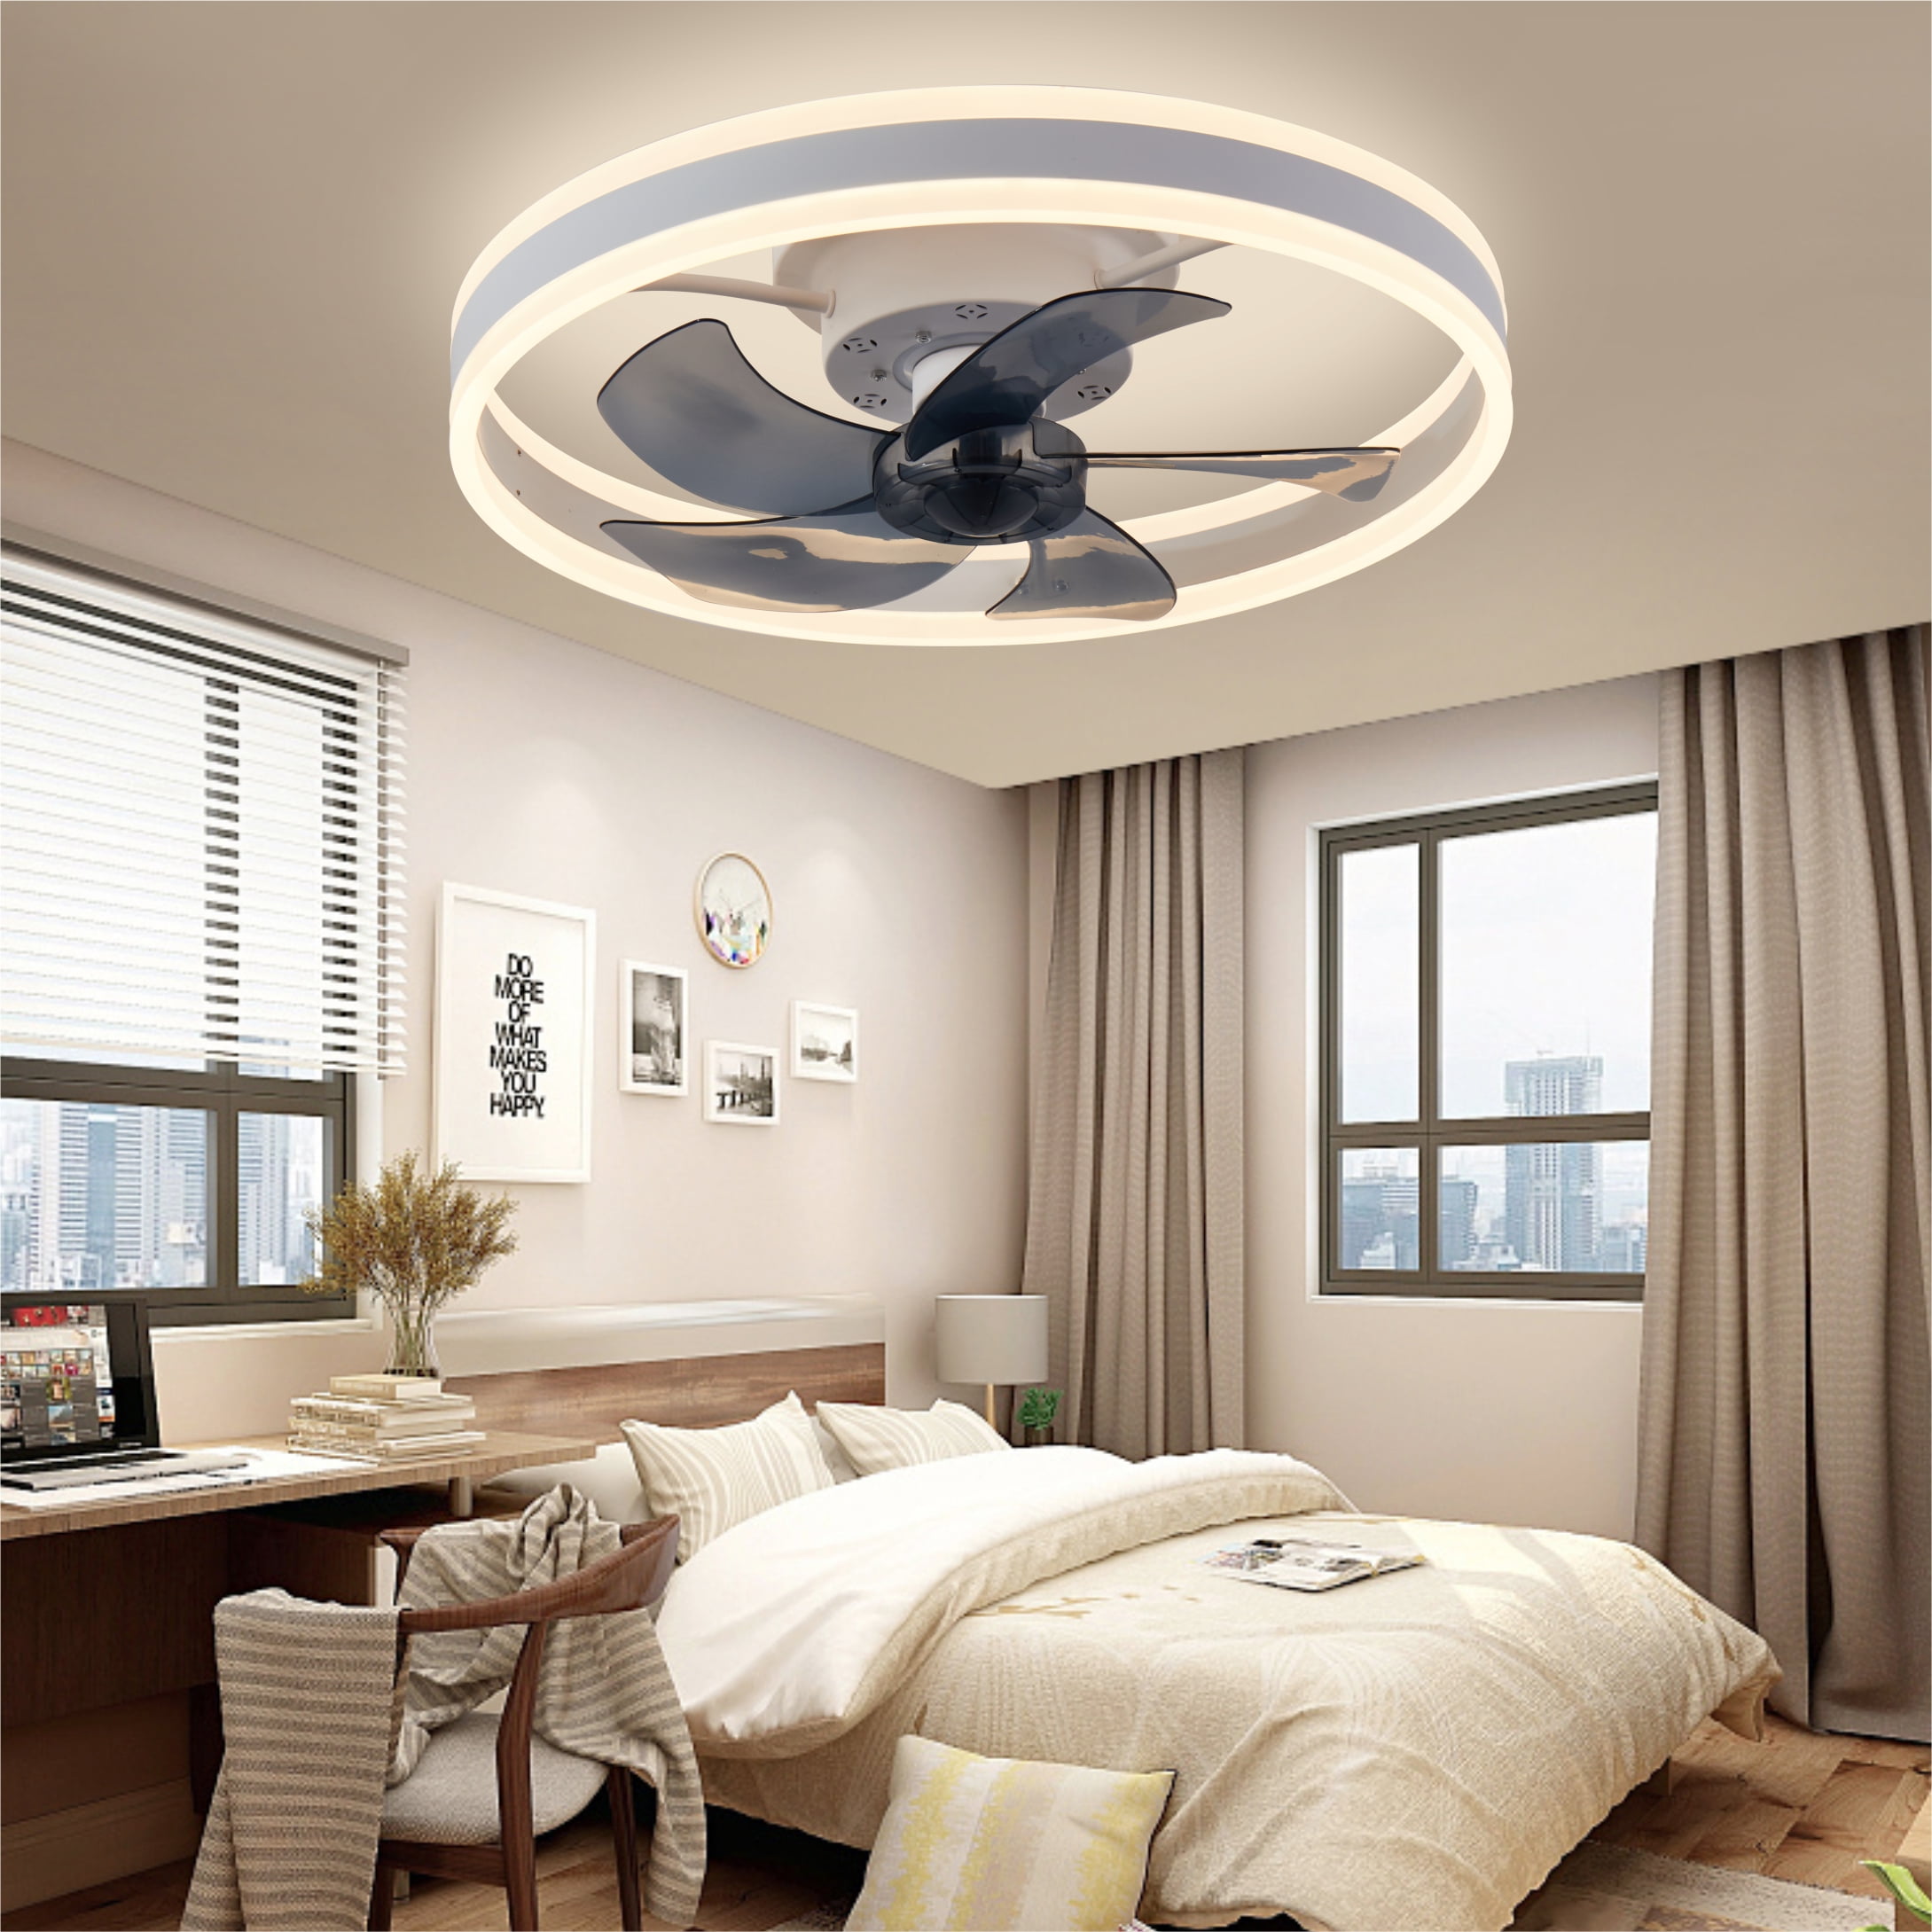 CHANFOK Ceiling fan with Light Flush Mount Modern Indoor 19.7